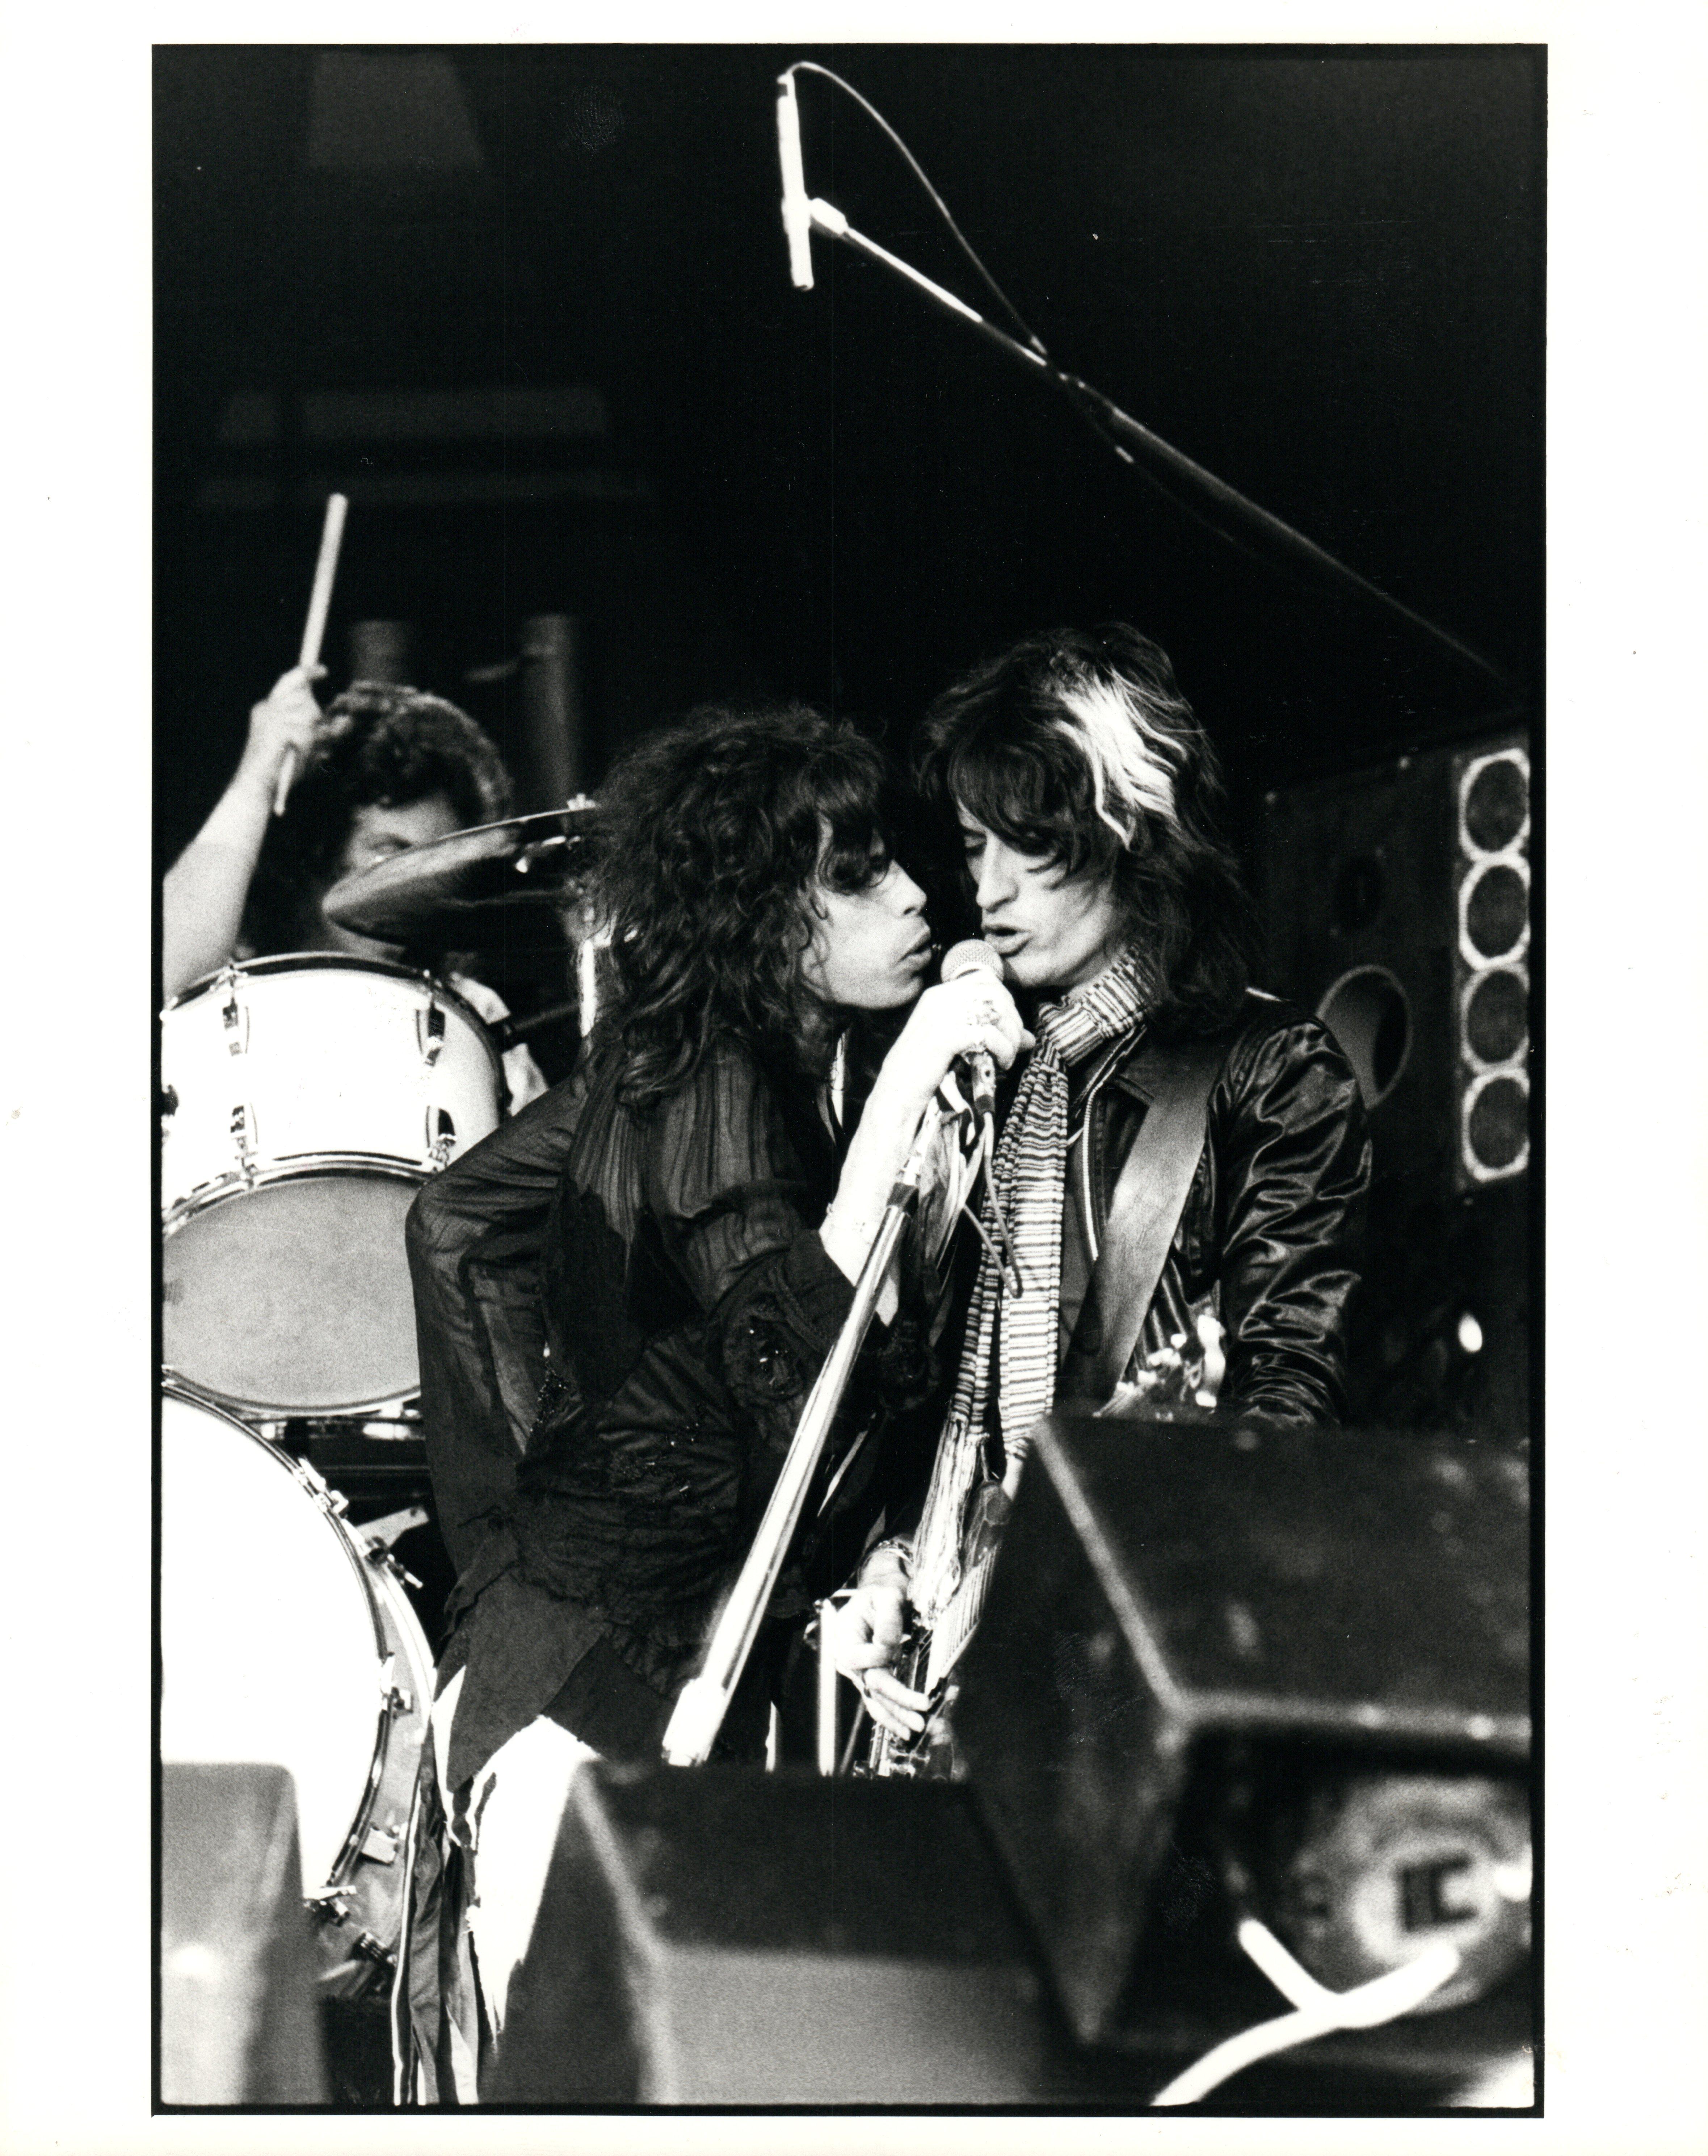 Paul Cox Black and White Photograph - Aerosmith on Stage Vintage Original Photograph